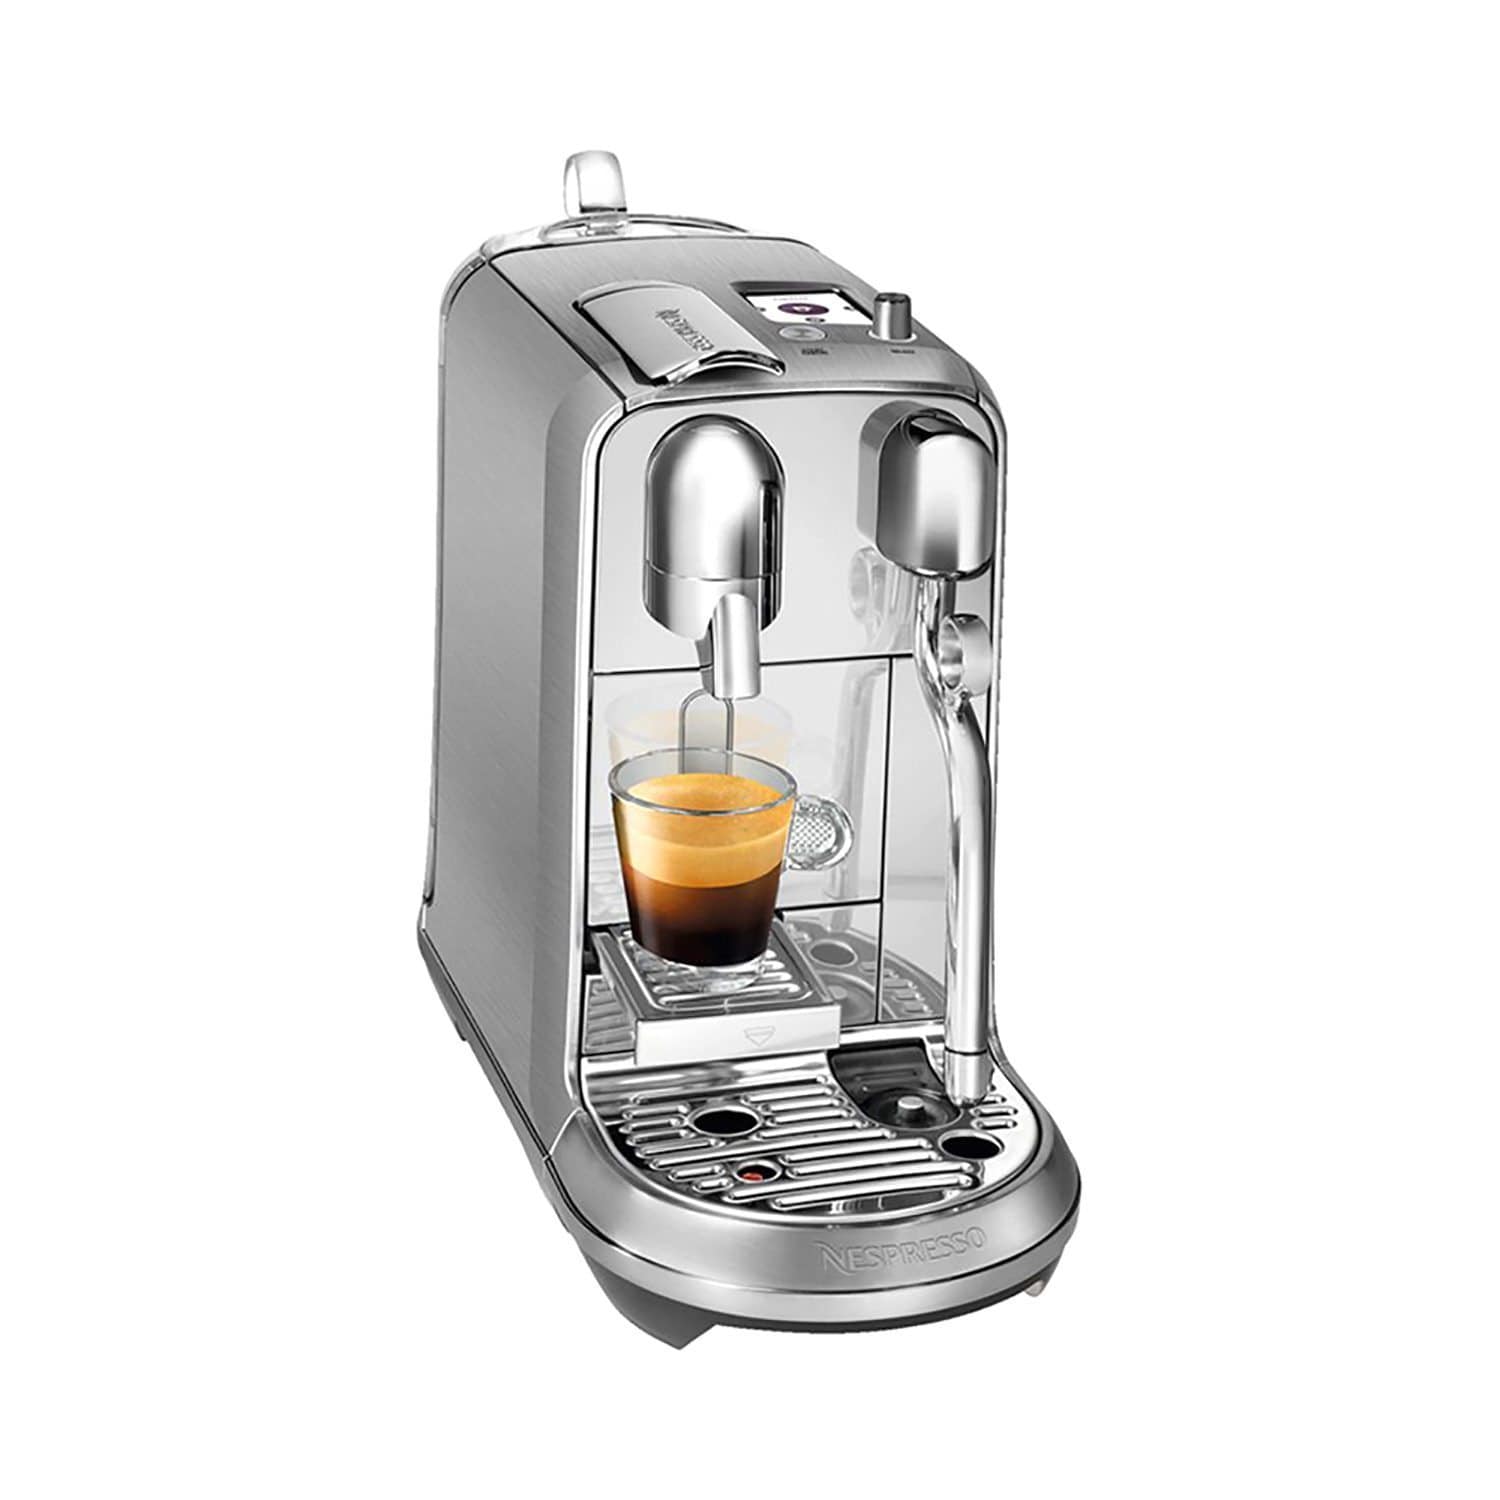 Nespresso Creatista Plus Coffee Machine - Silver - J520-ME-ME-NE - Jashanmal Home